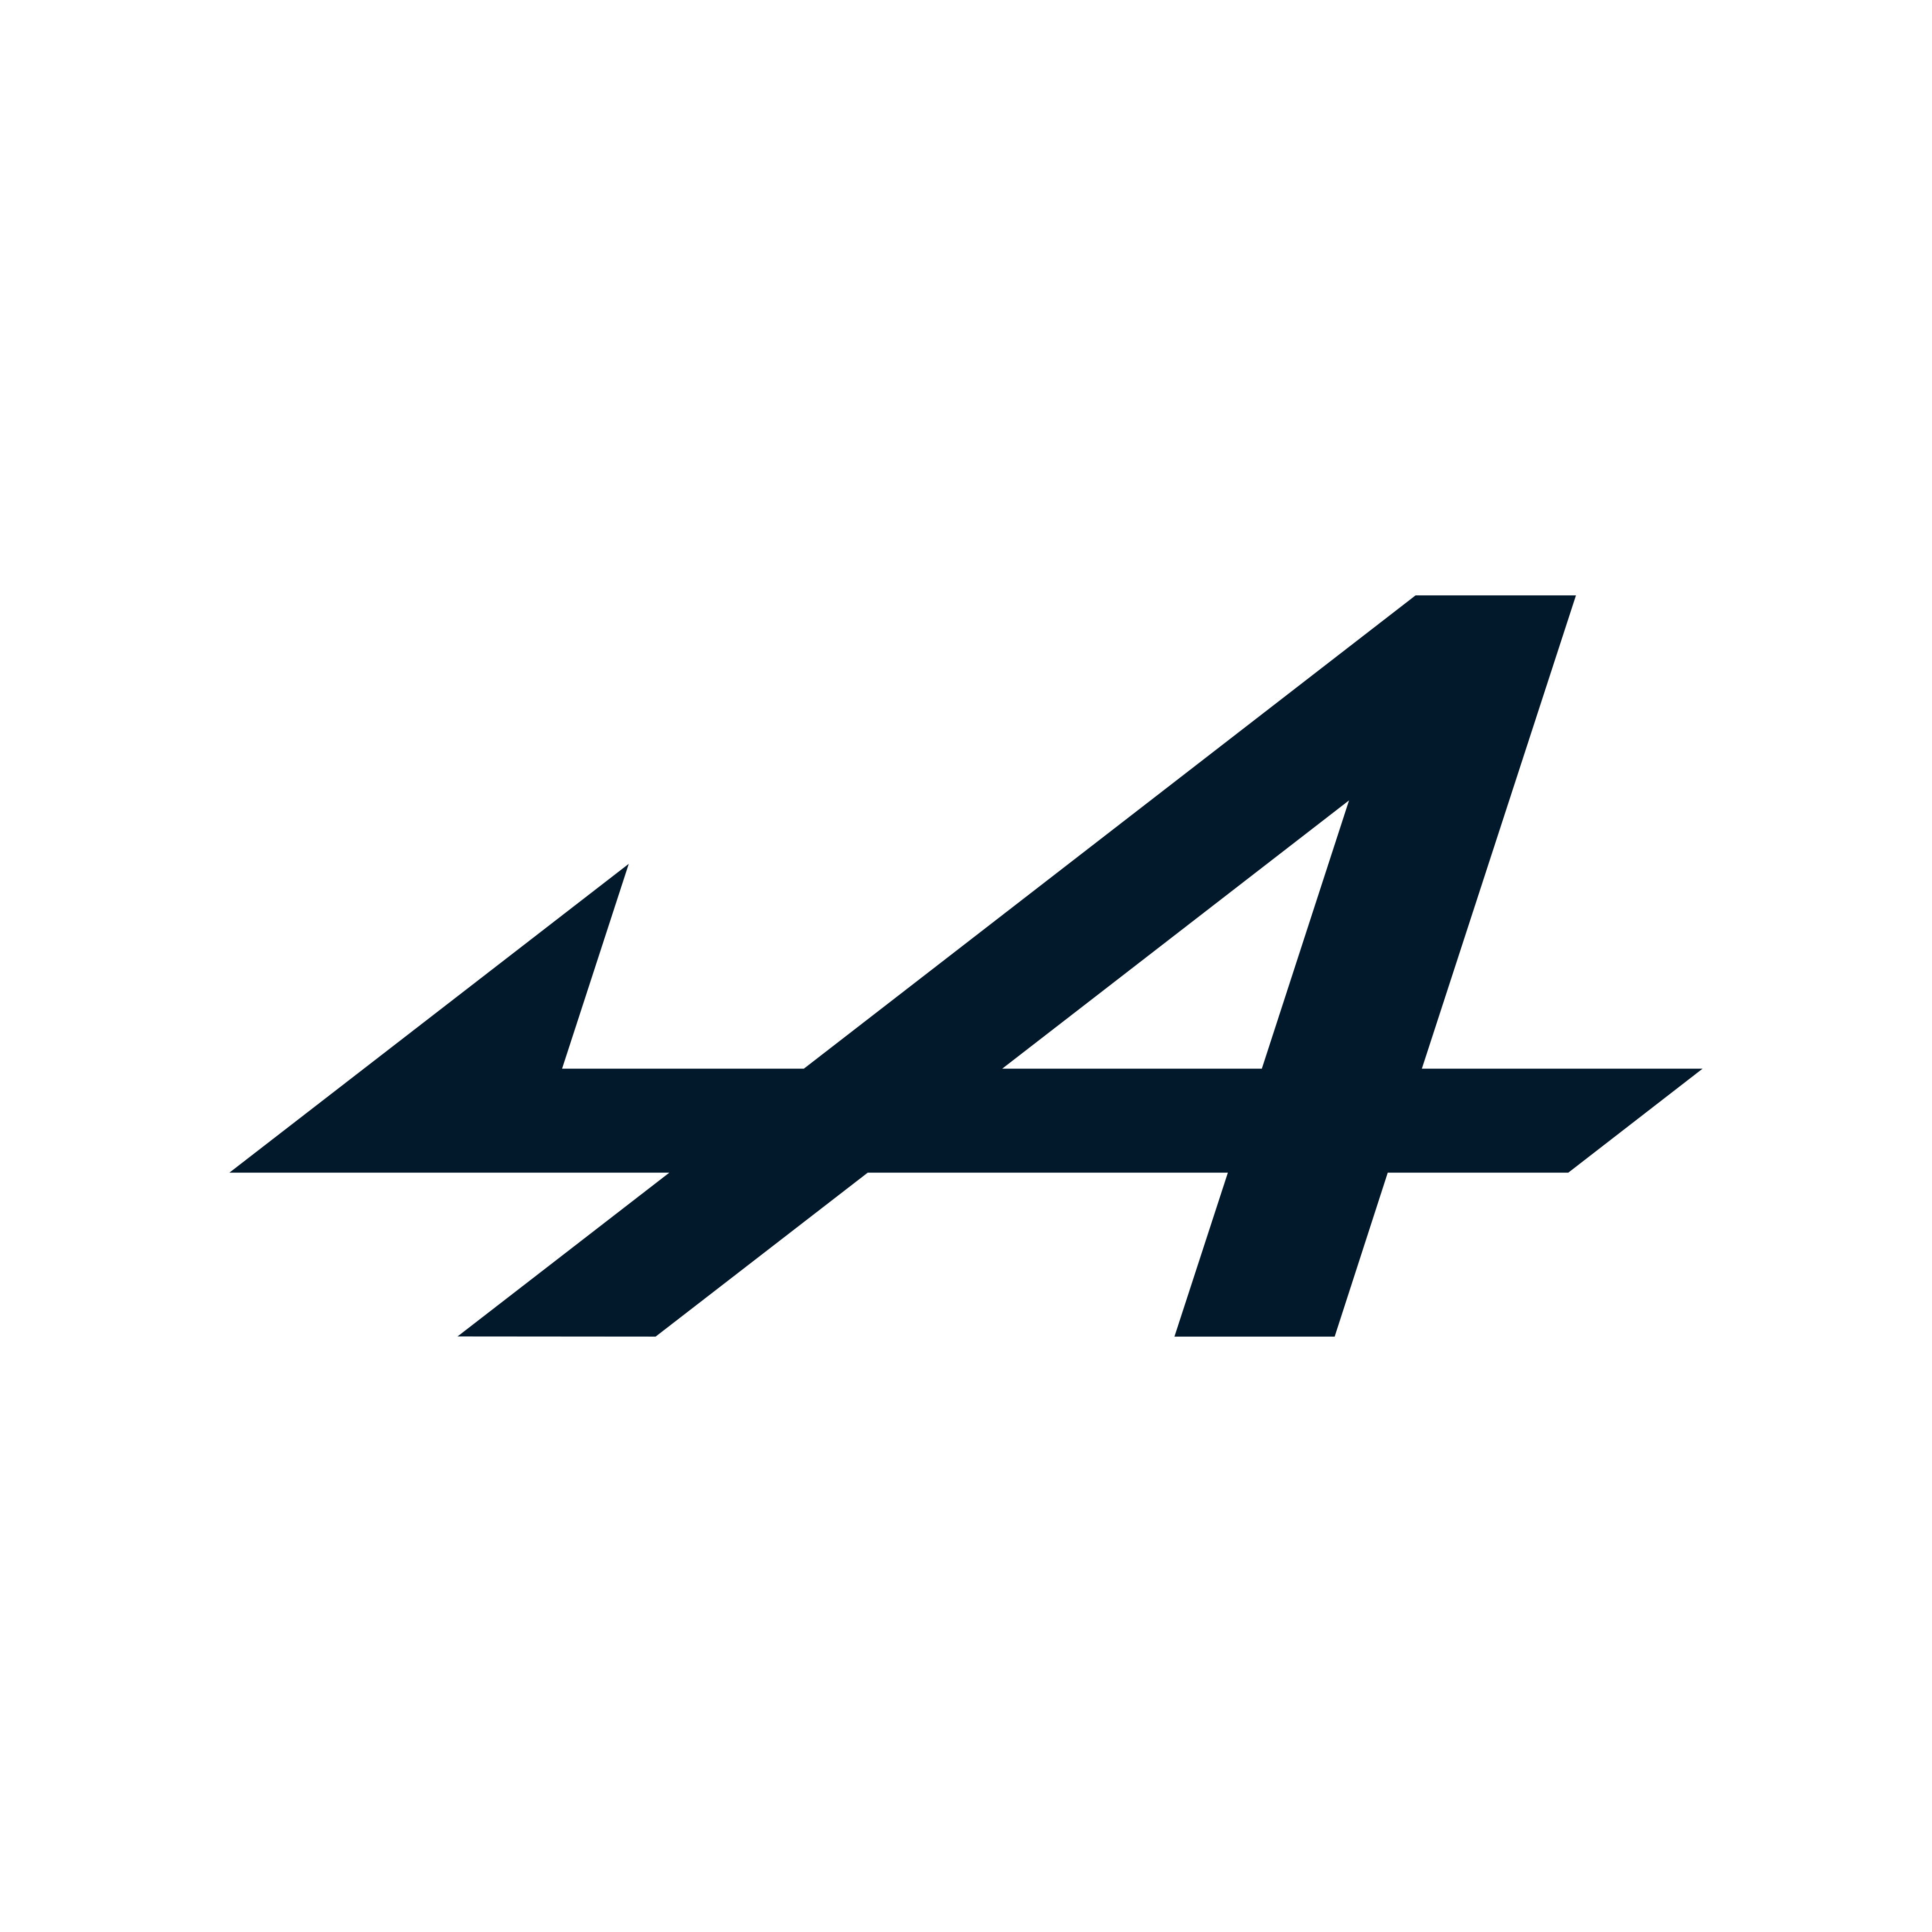 Alpine F1 Team Logo PNG.